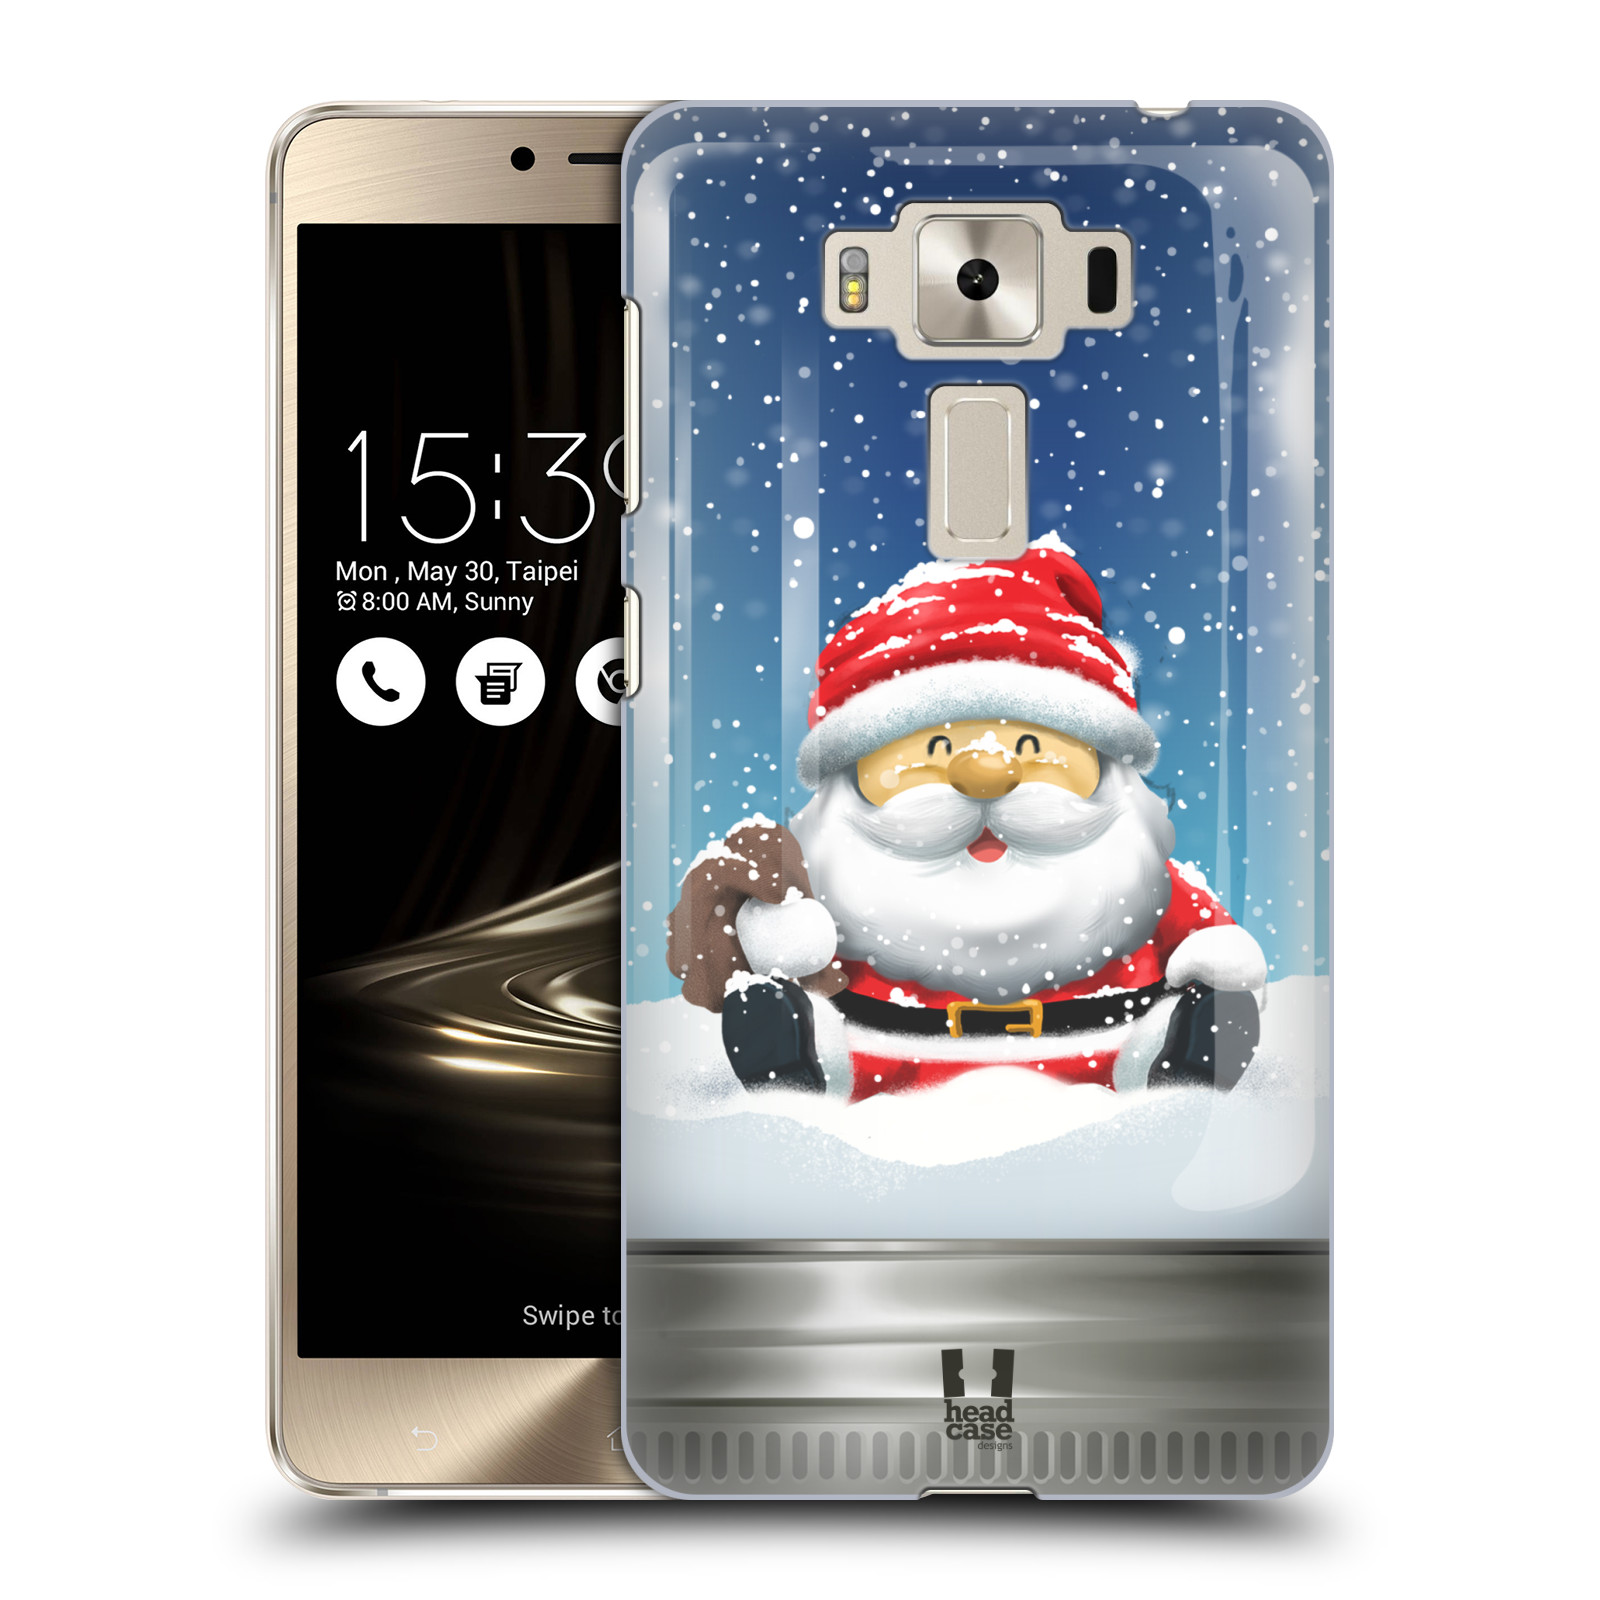 HEAD CASE plastový obal na mobil Asus Zenfone 3 DELUXE ZS550KL vzor Vánoce v těžítku SANTA